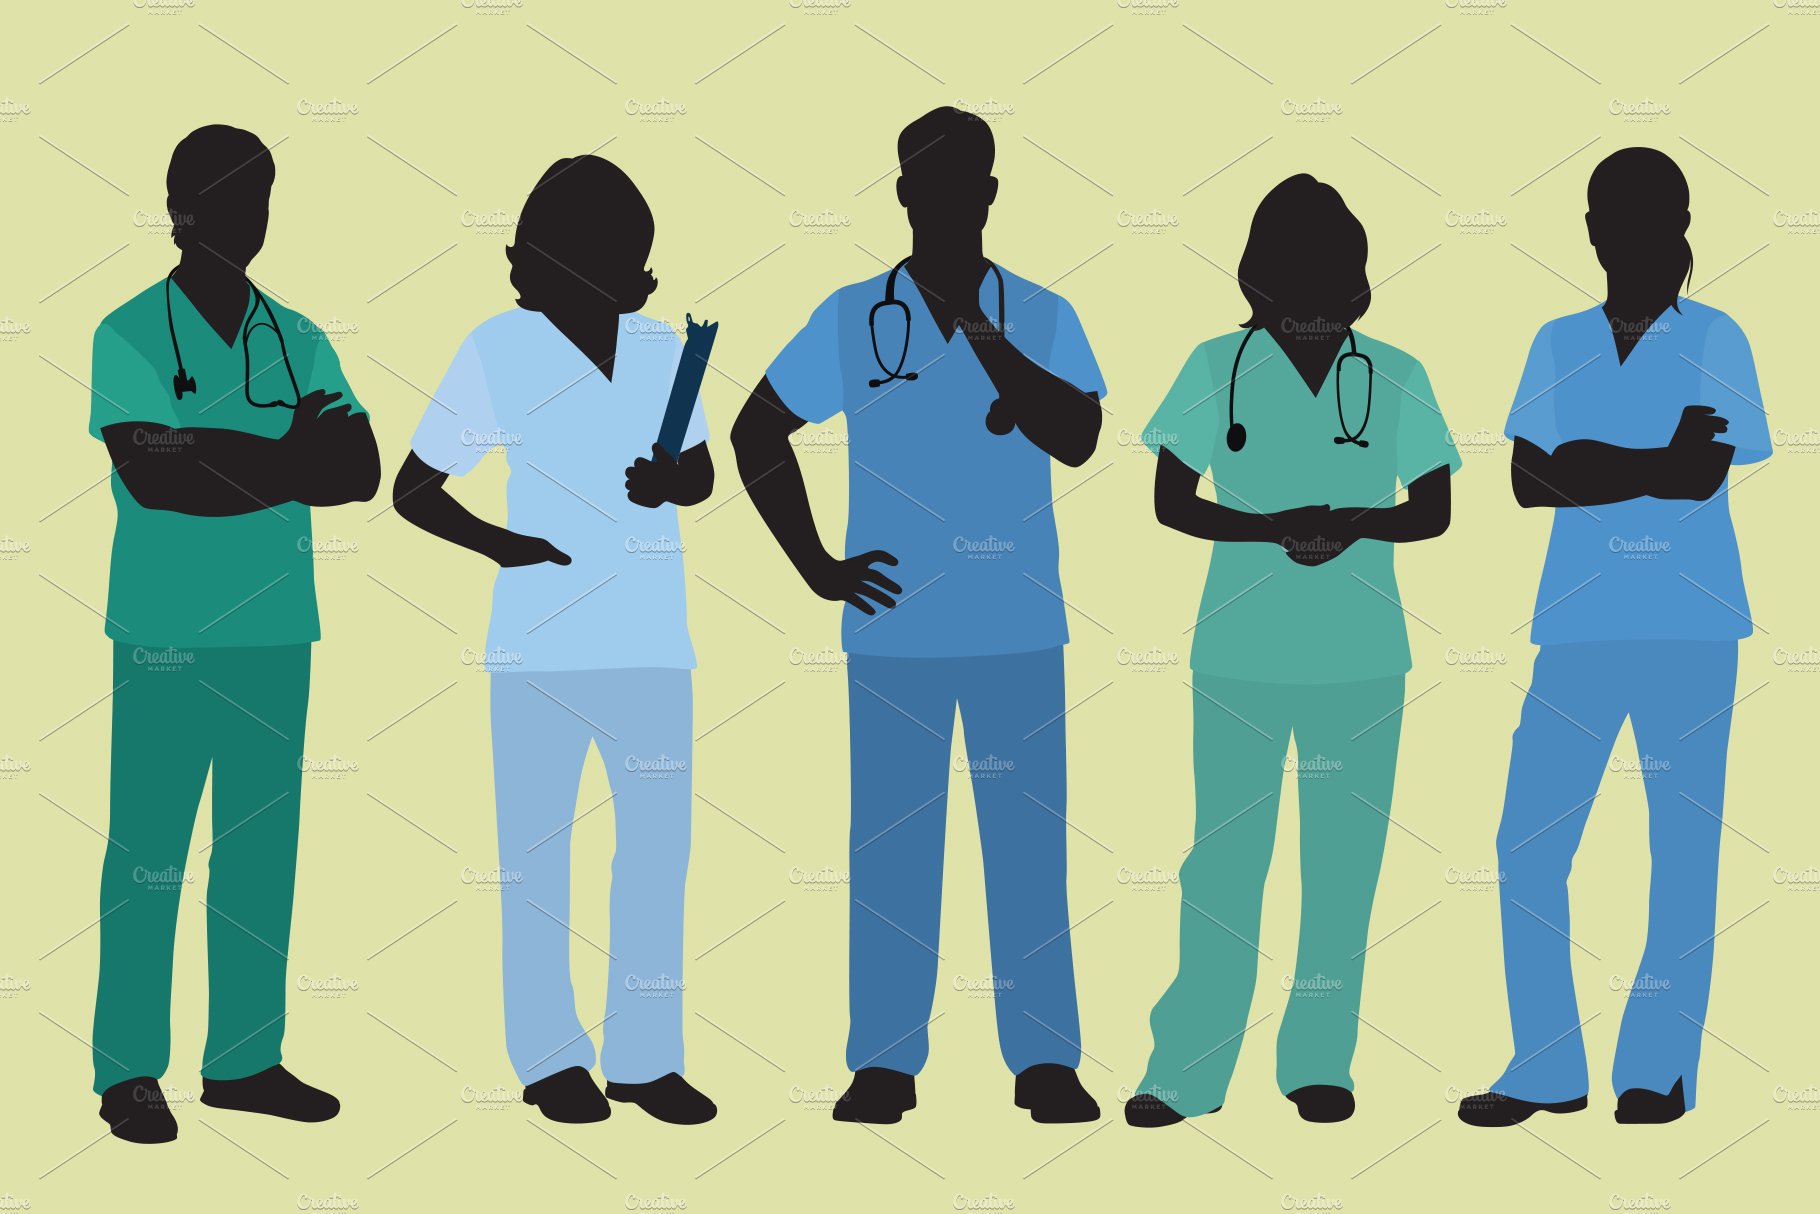 Silhouette Doctors/Nurses in Scrubs cover image.